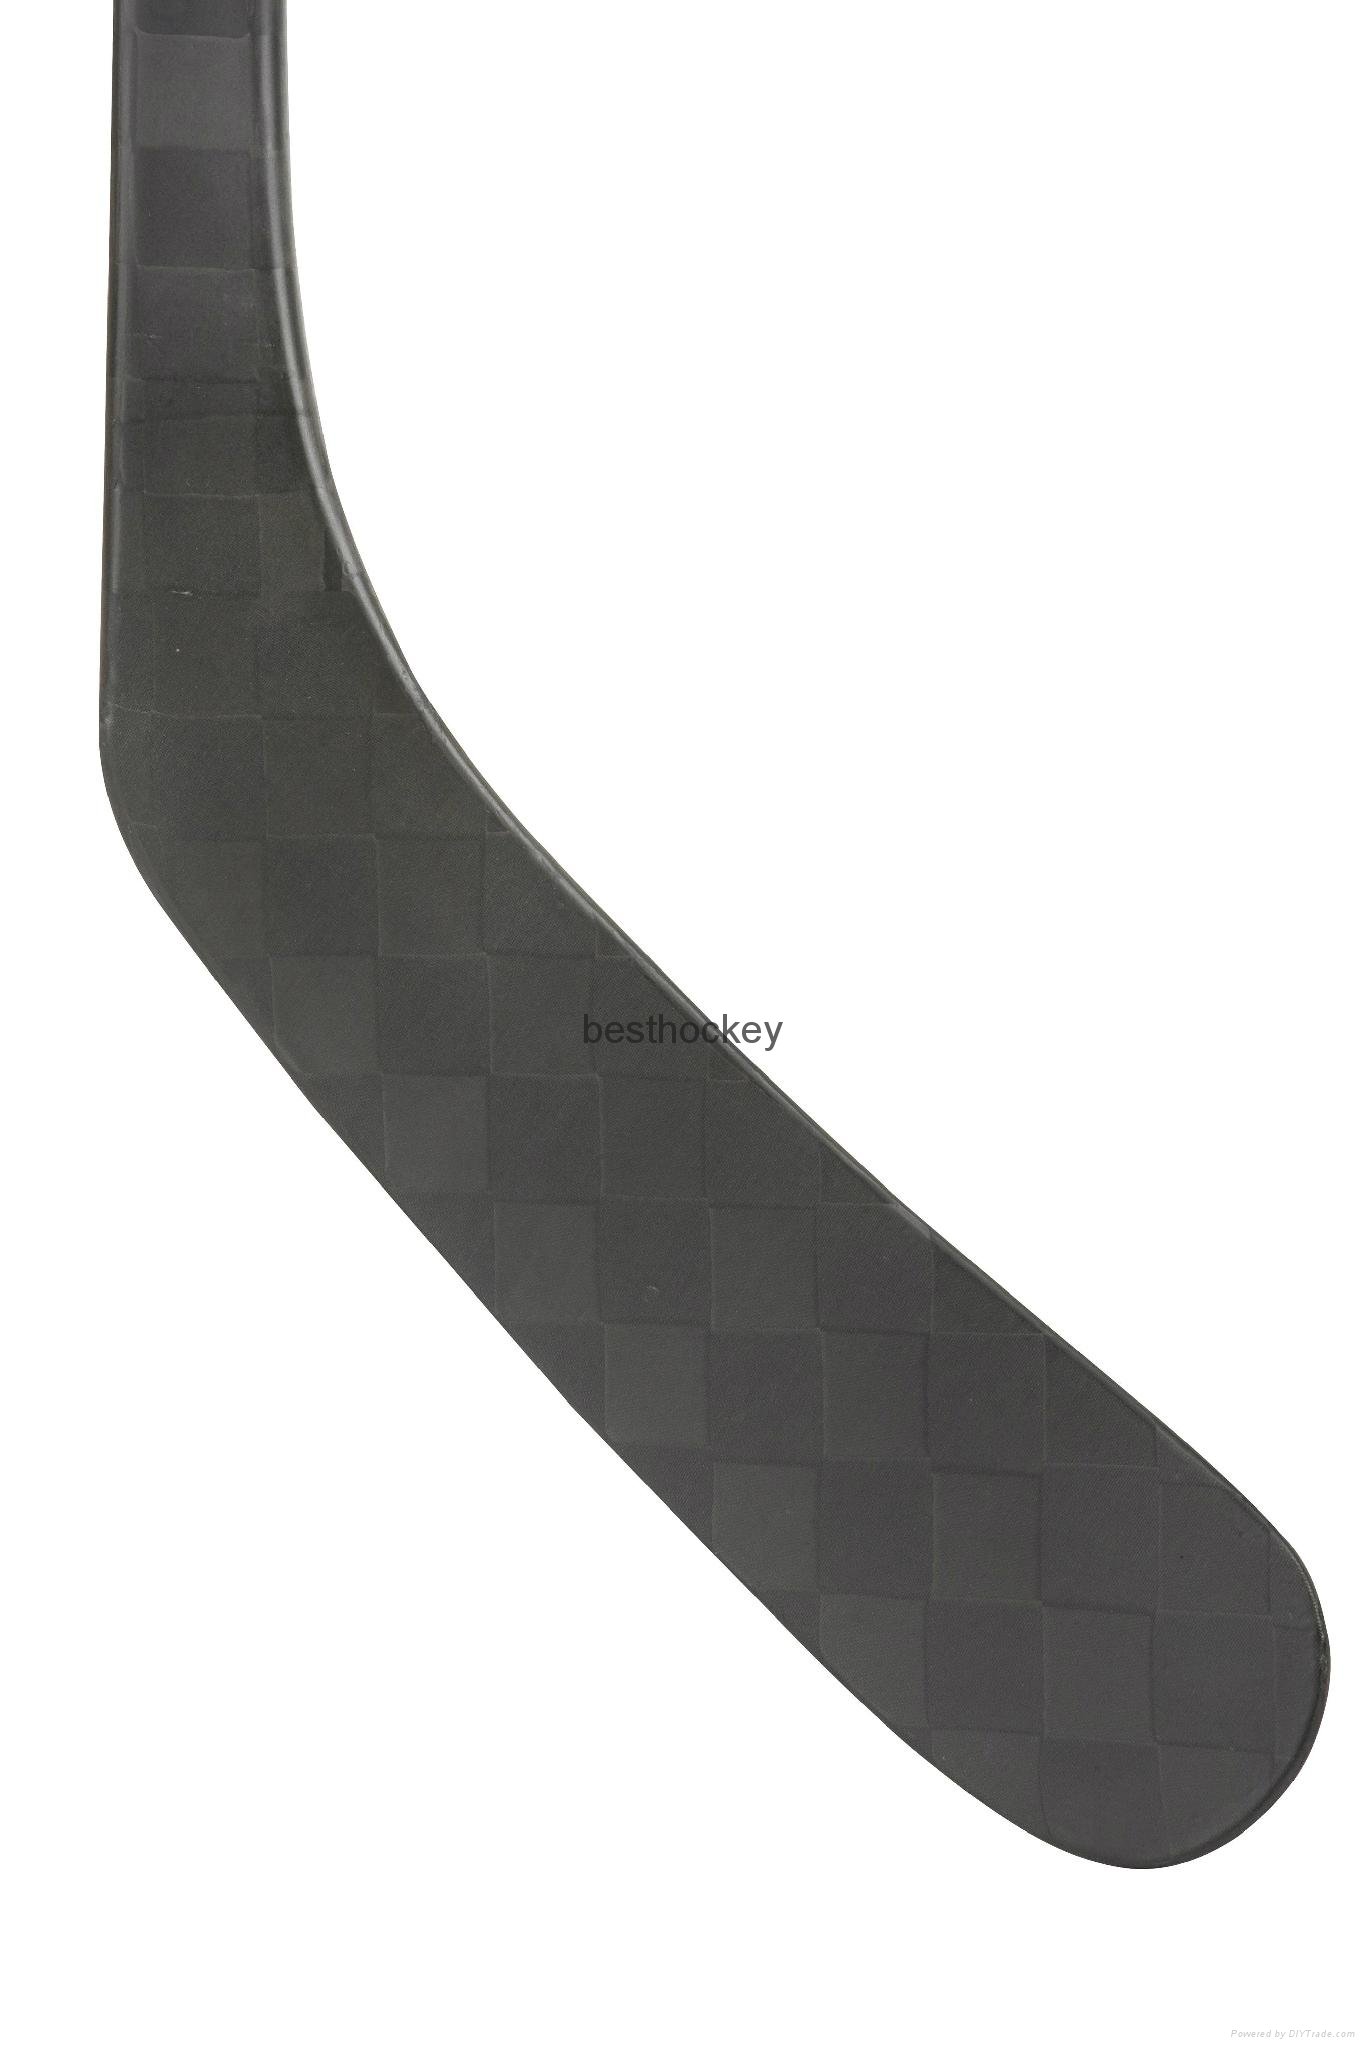 Custom High-Performance Carbon Fiber Elite Ice Hockey Stick 5